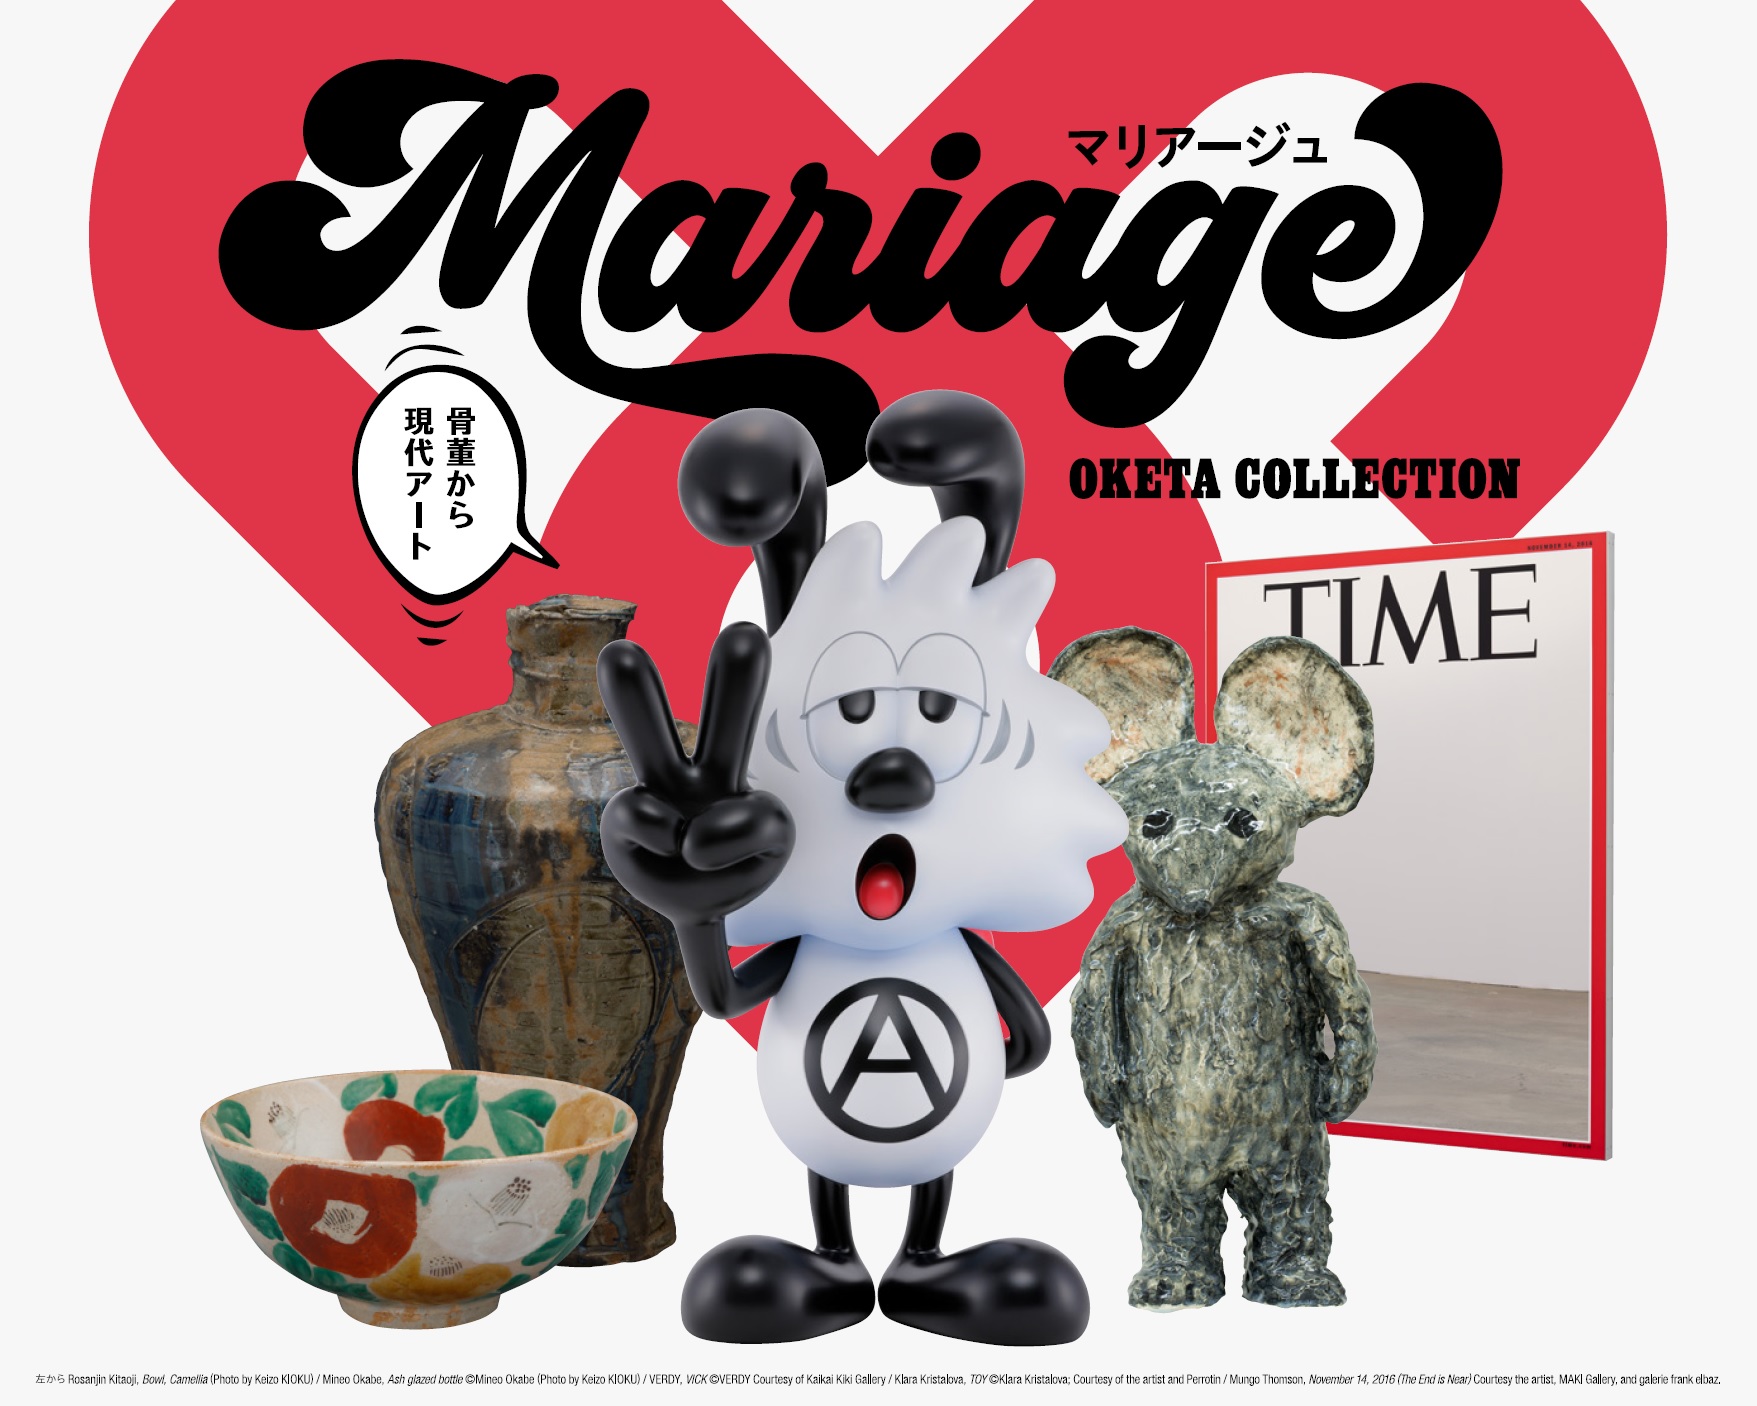 OKETA COLLECTION「Mariage −骨董から現代アート−」展 - WHAT MUSEUM 